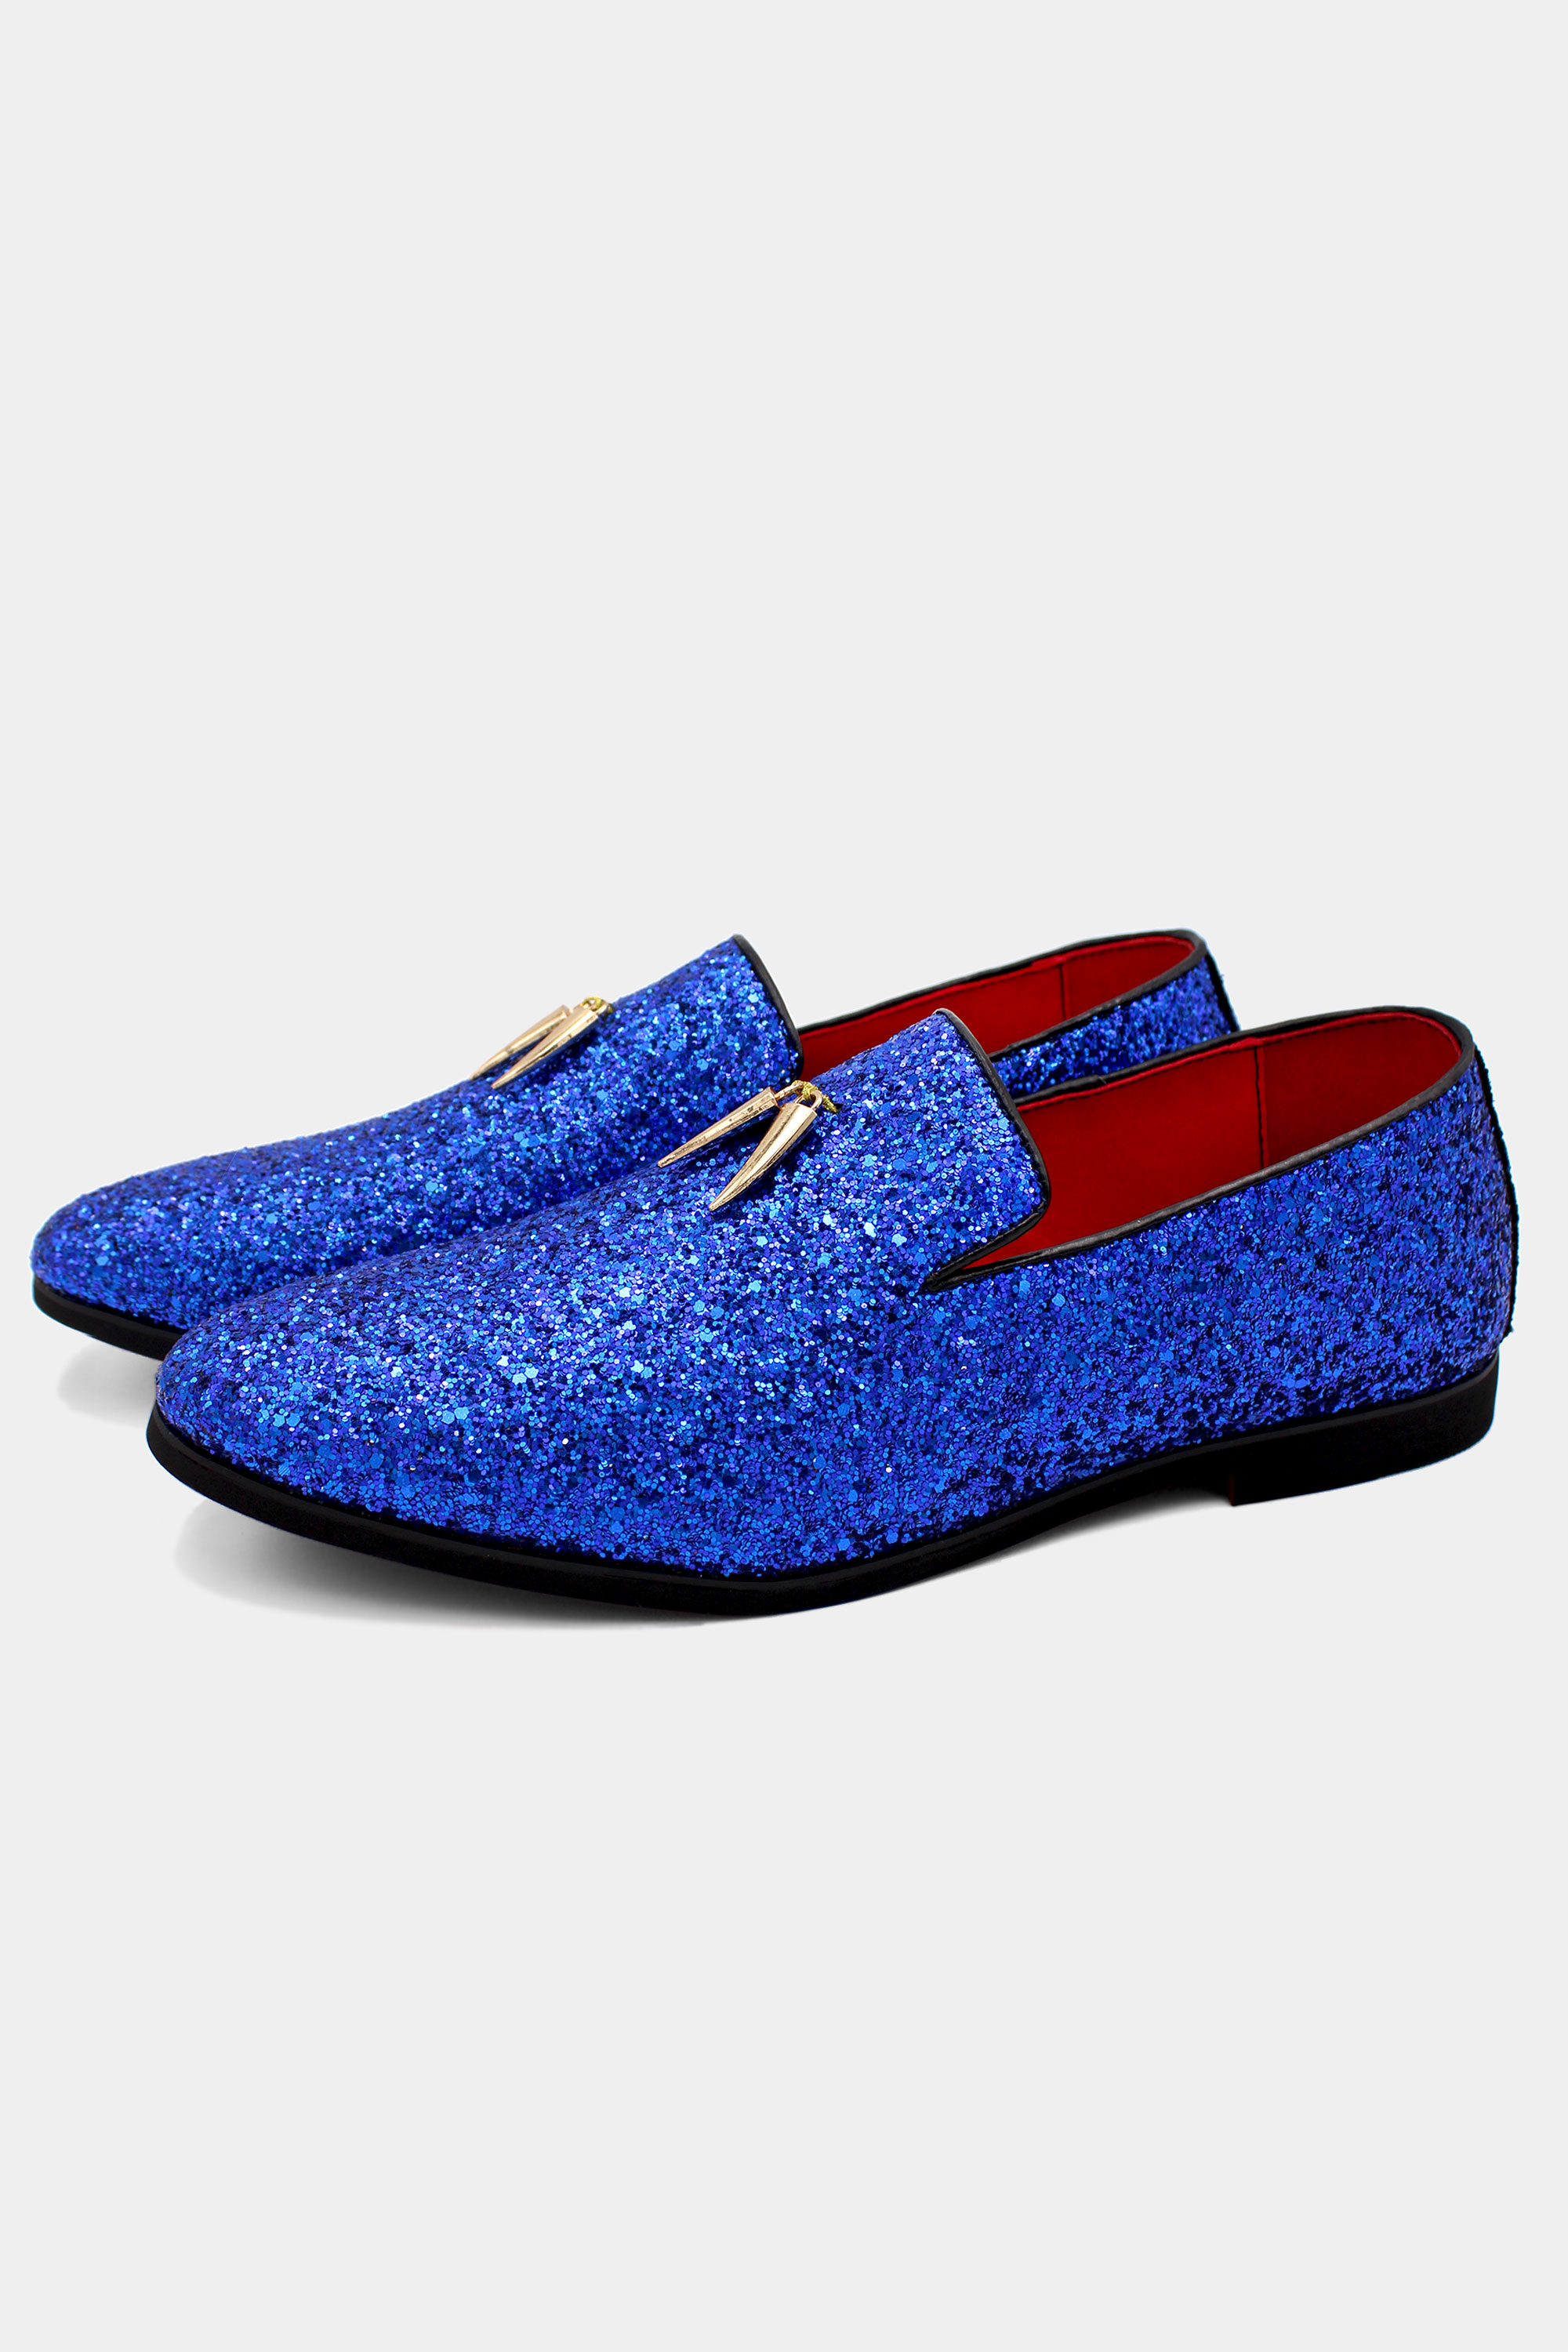 Blue-Glitter-Loafers-Shoes-Groom-Wedding-Prom-Shoes-from-Gentlemansguru.com